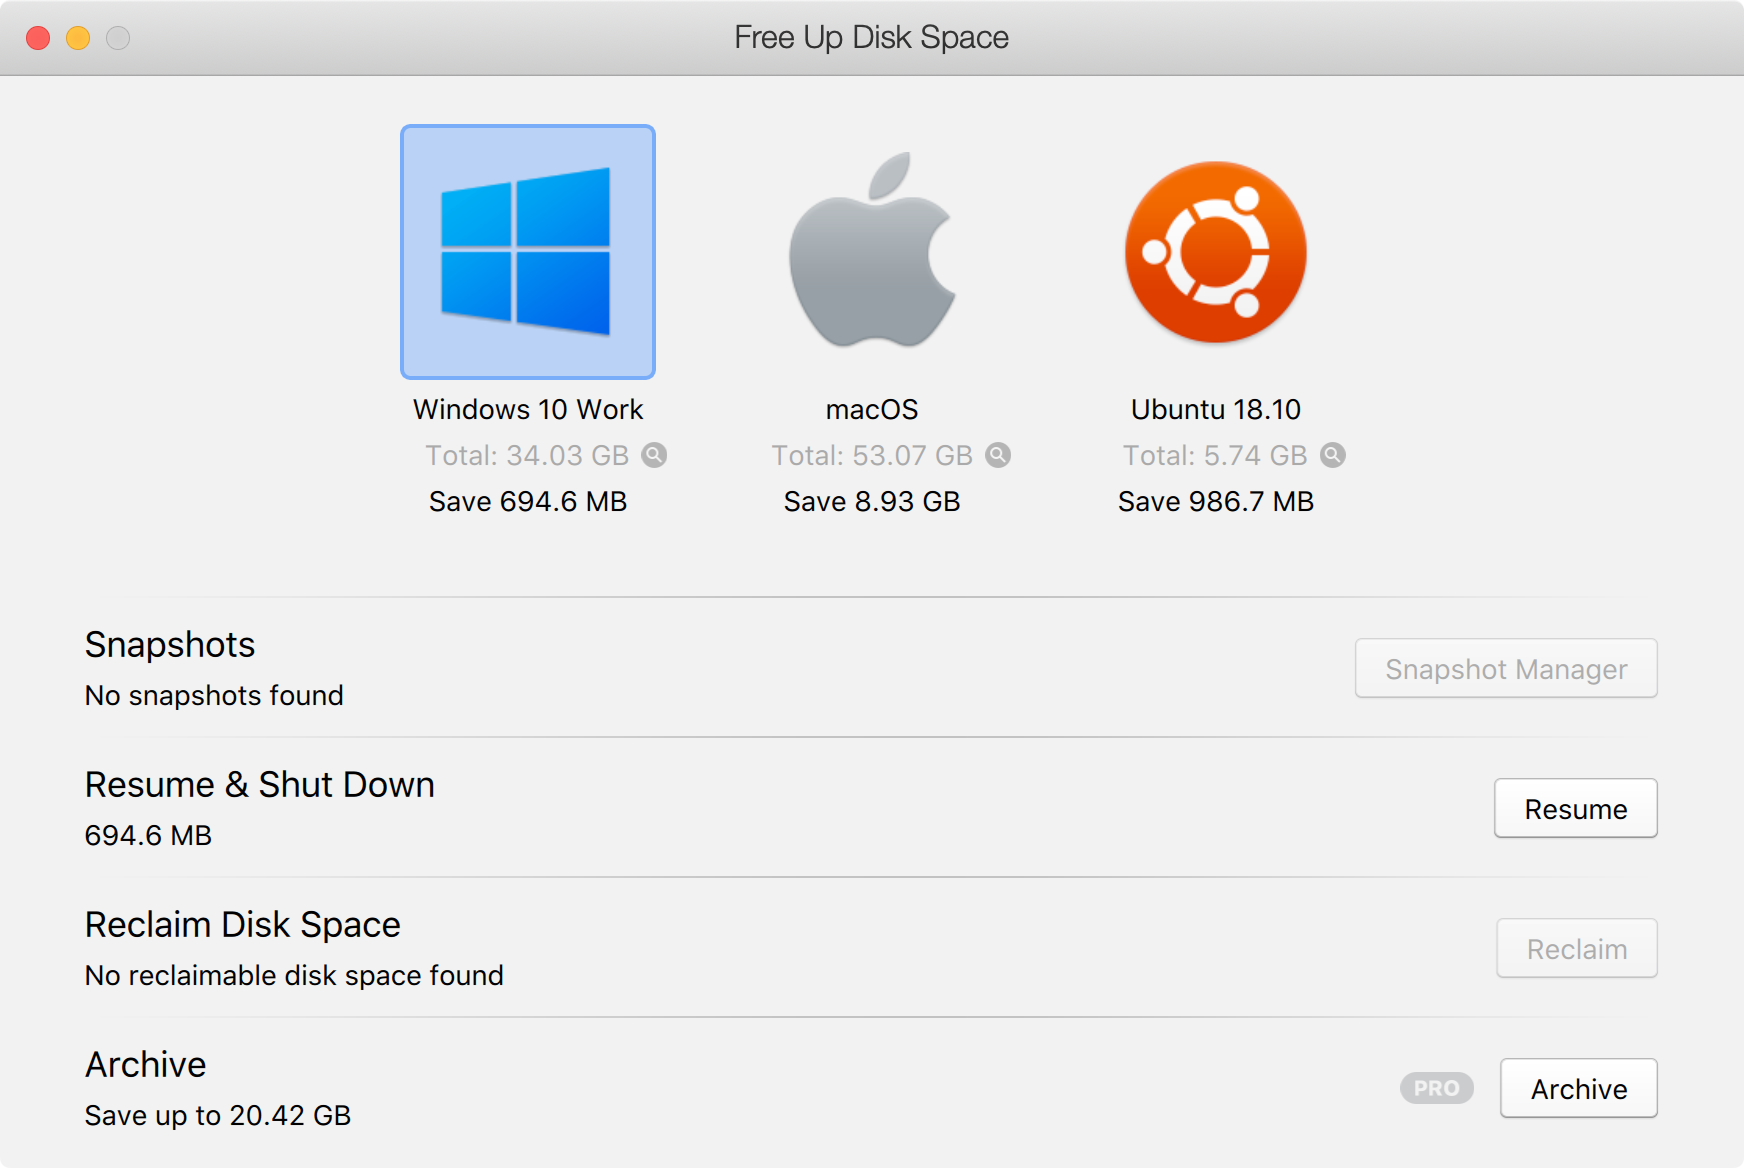 parallels desktop 16 for mac free